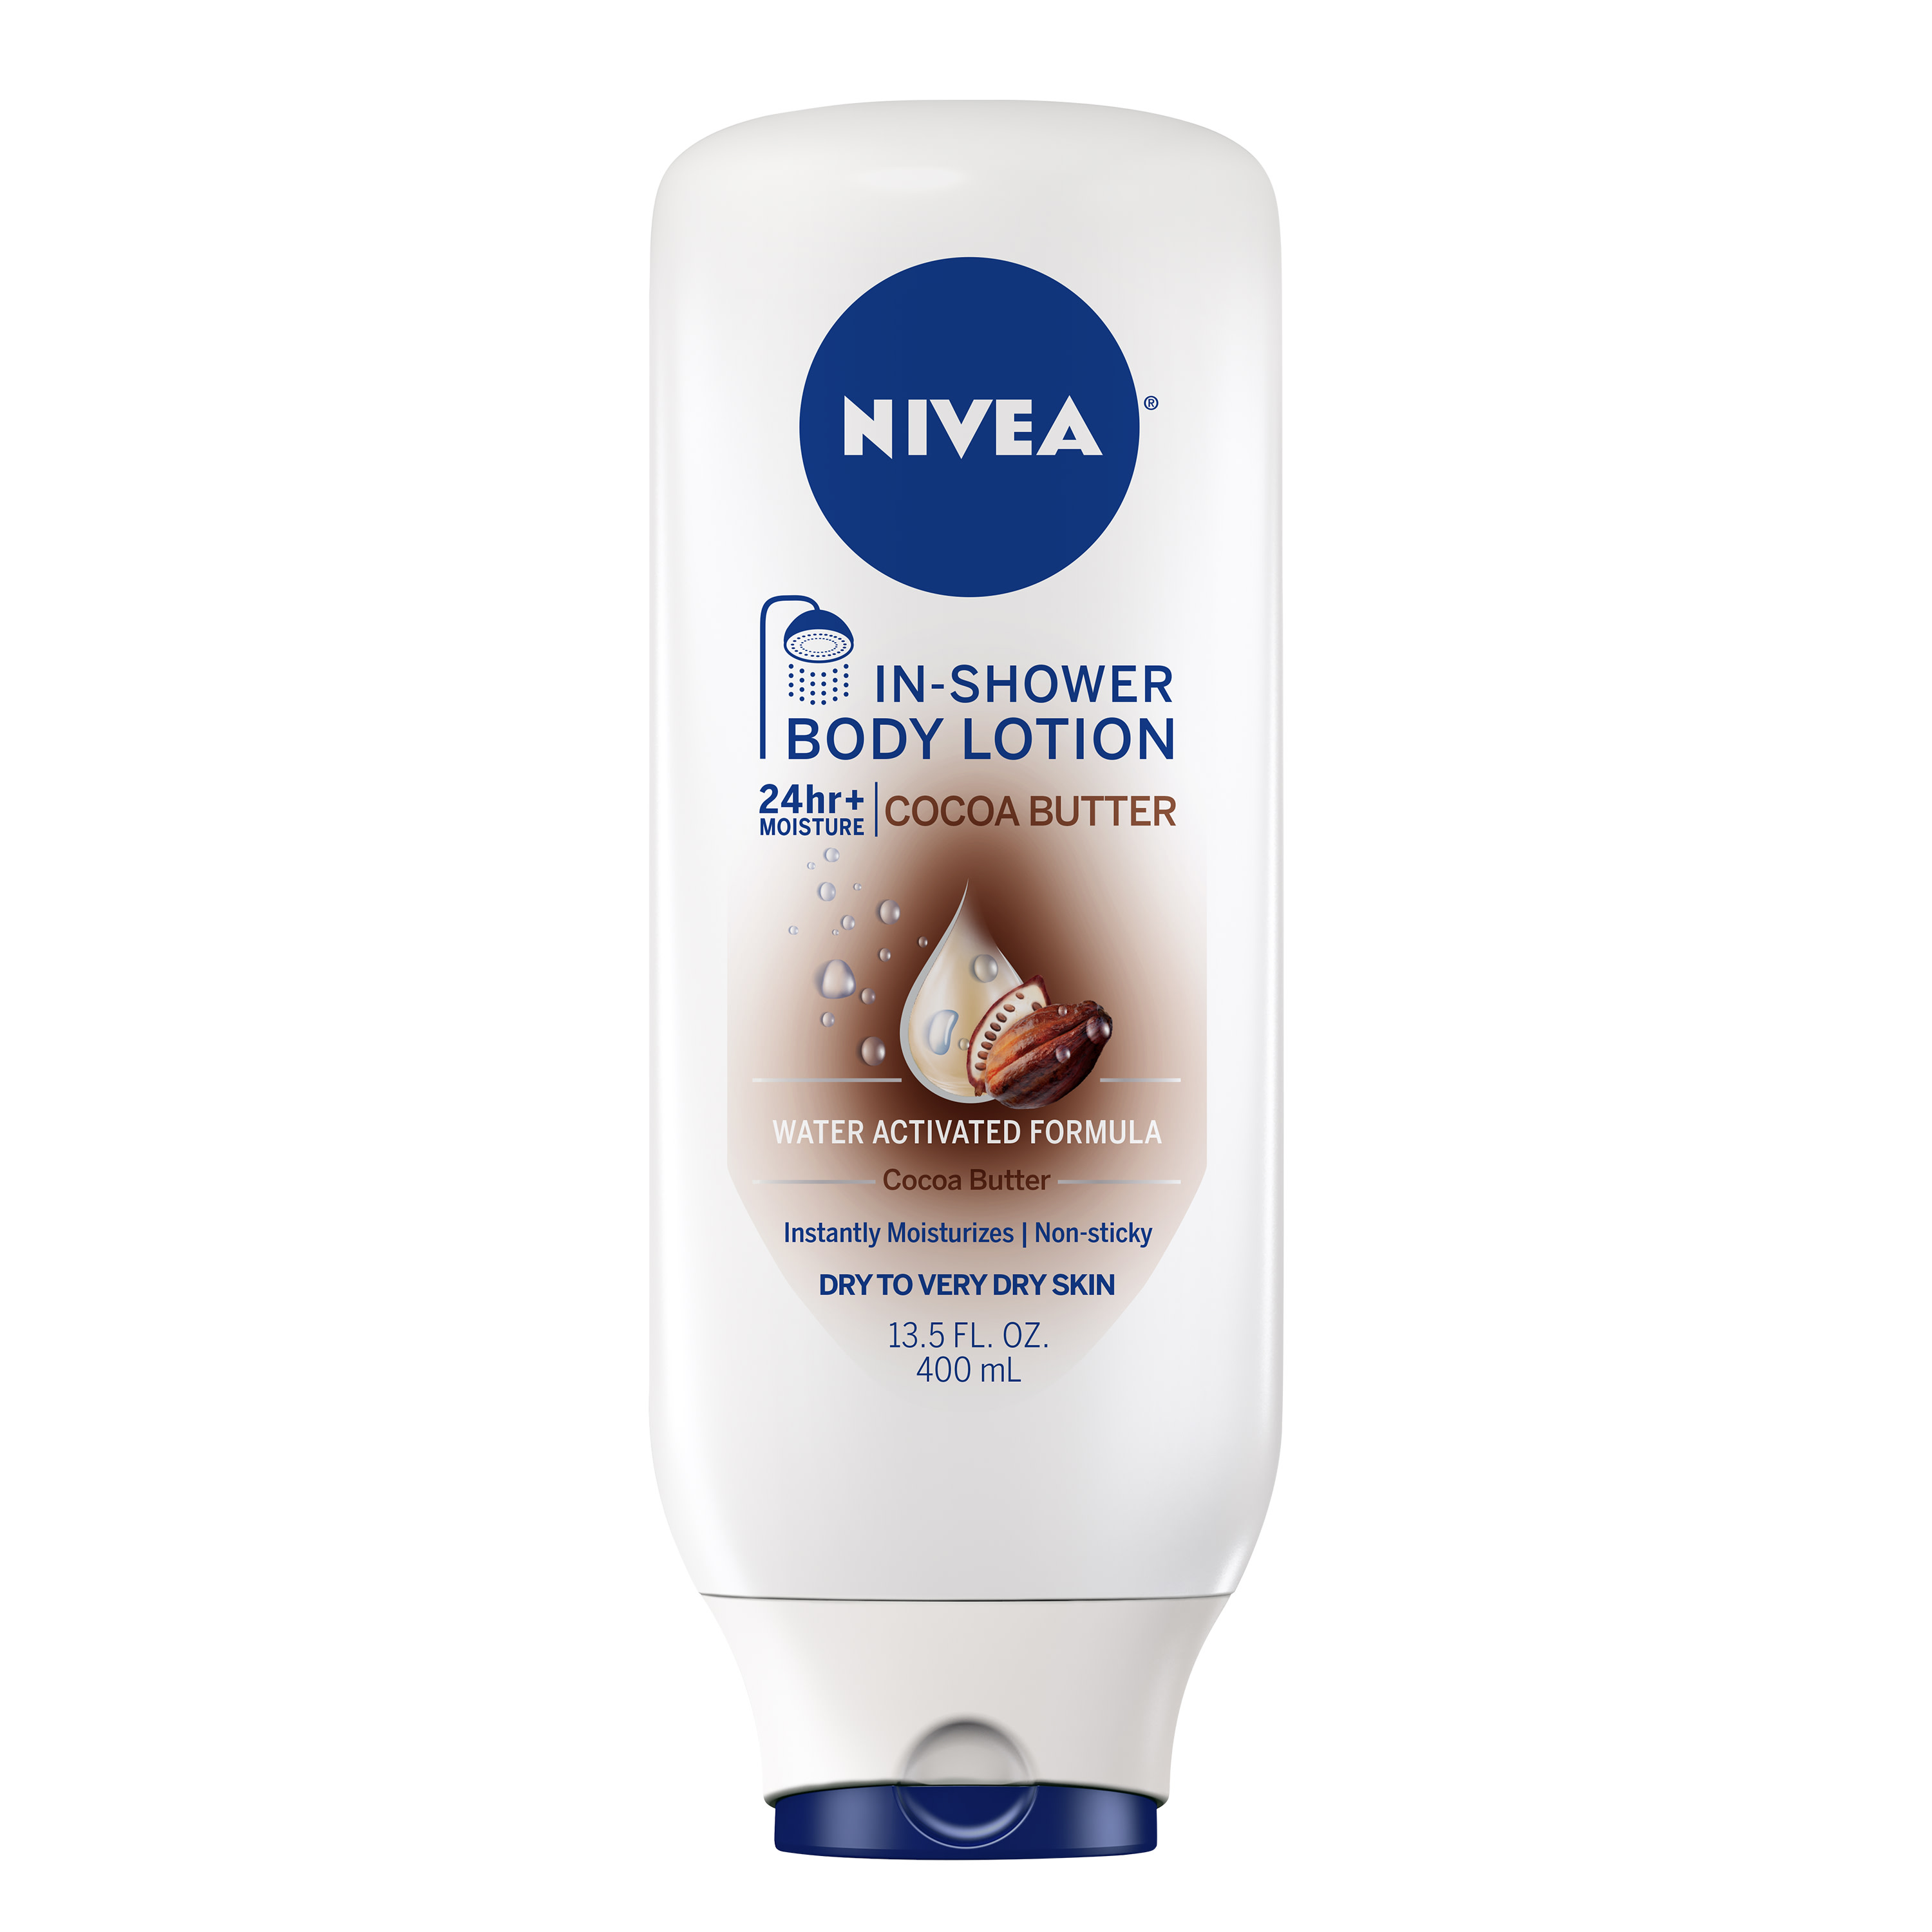 NIVEA Cocoa Butter In Shower Lotion, 13.5 Fl Oz Bottle - image 1 of 5